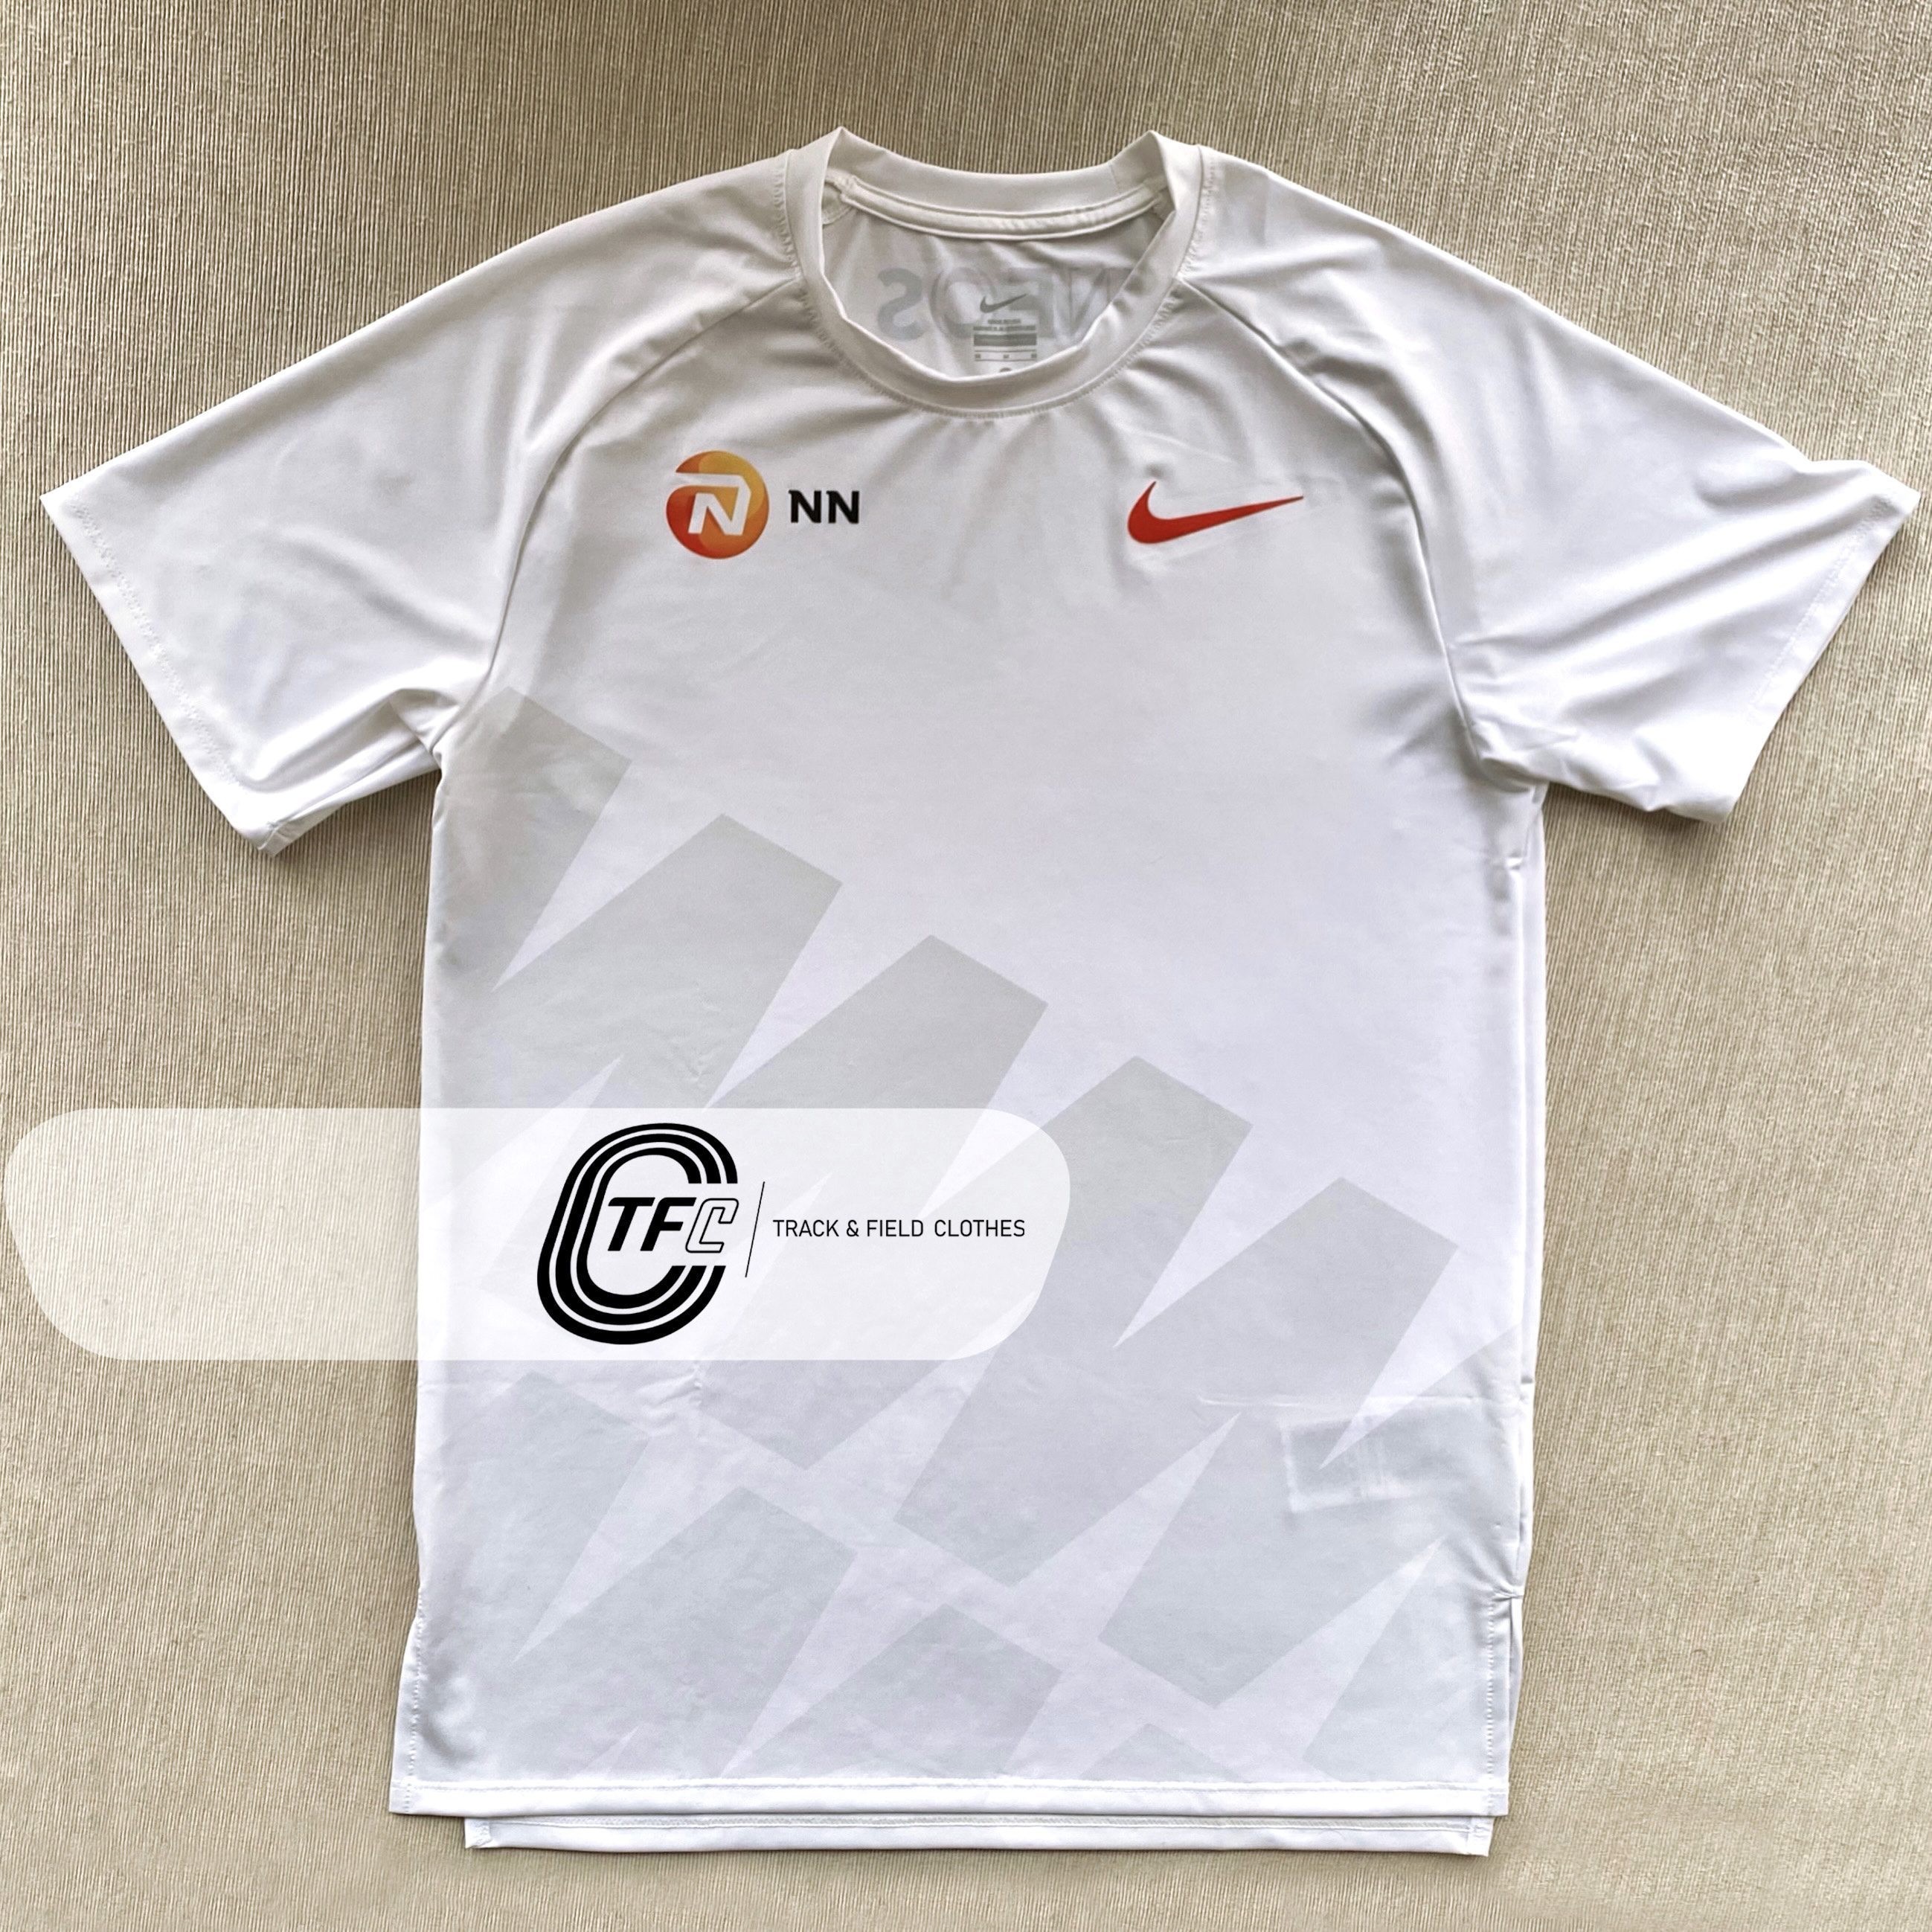 INEOS x Nike 2022 NN Running Team Pro Elite T-Shirt 